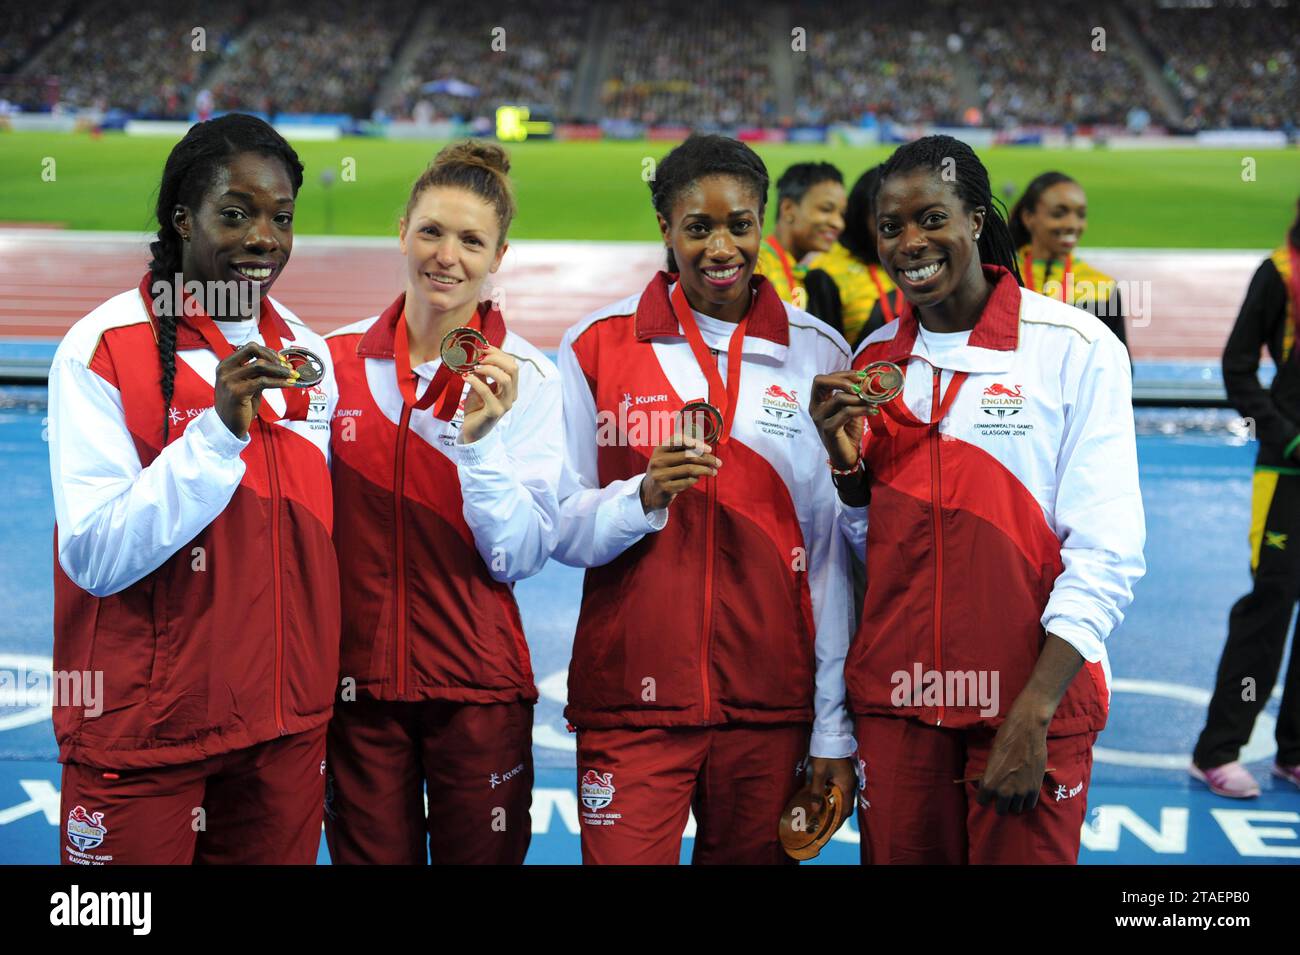 Anyika Onuora, Kelly Massey, Shana Cox and Christine Ohuruogu of England bronze medal ceremony at the women’s 4x400m relays at the Commonwealth Games, Stock Photo